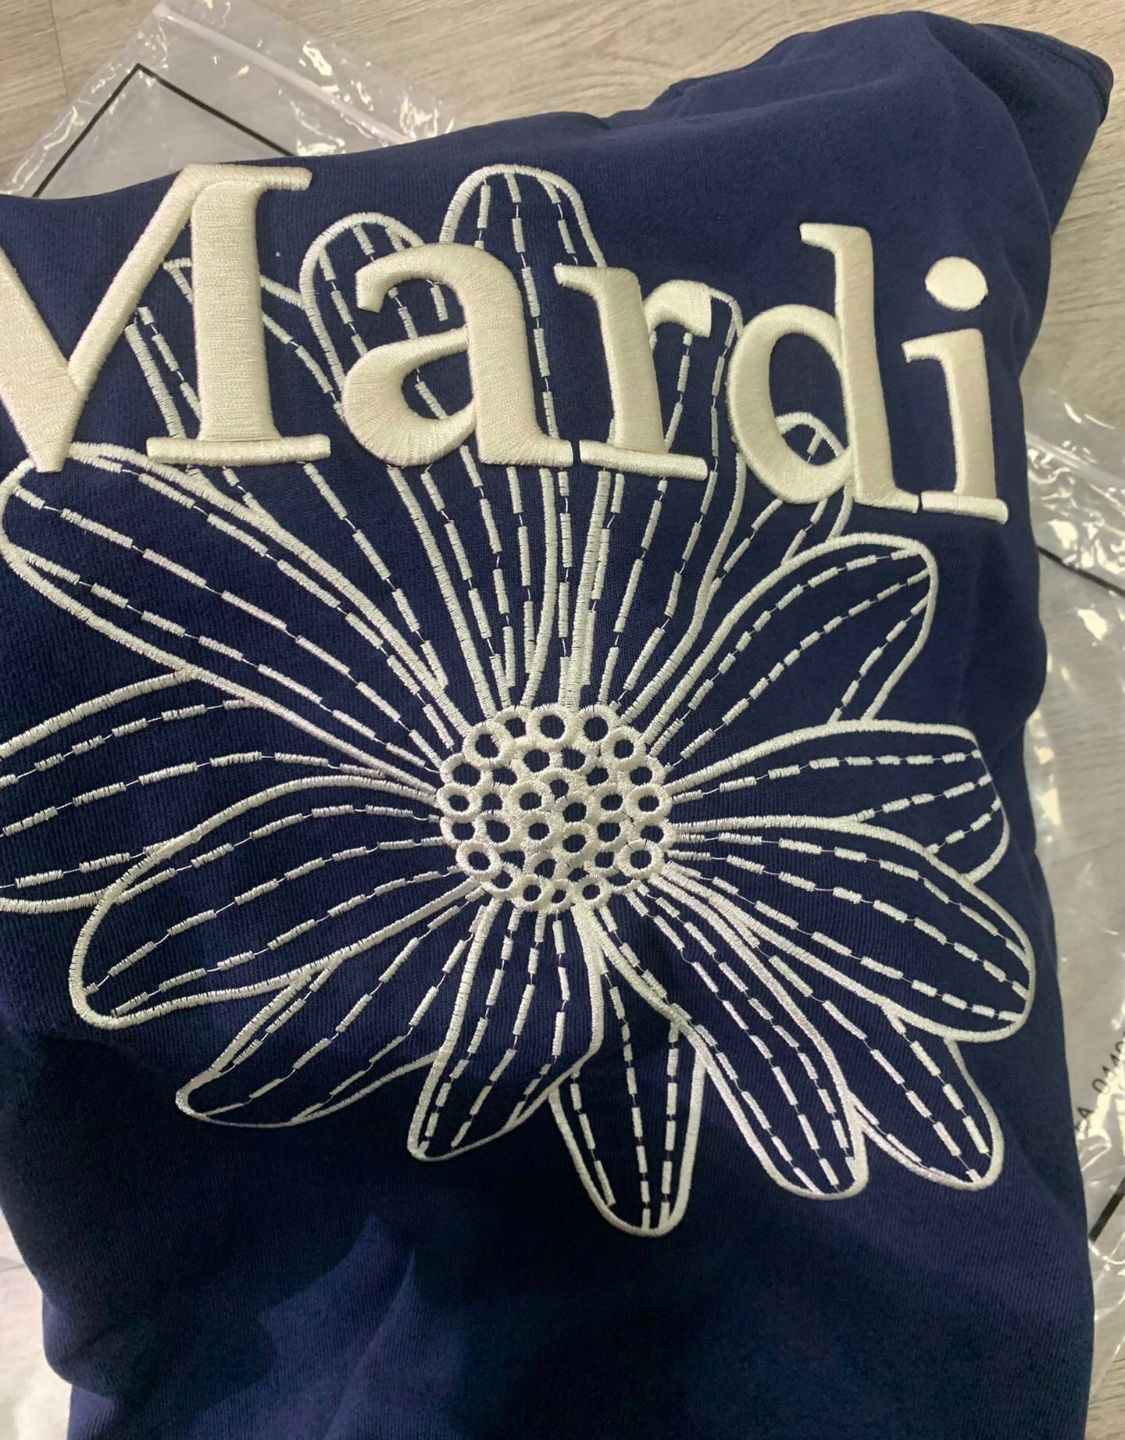 Mardi マルディメクルディ トレーナー スウェット 刺繍 ネイビー 韓国